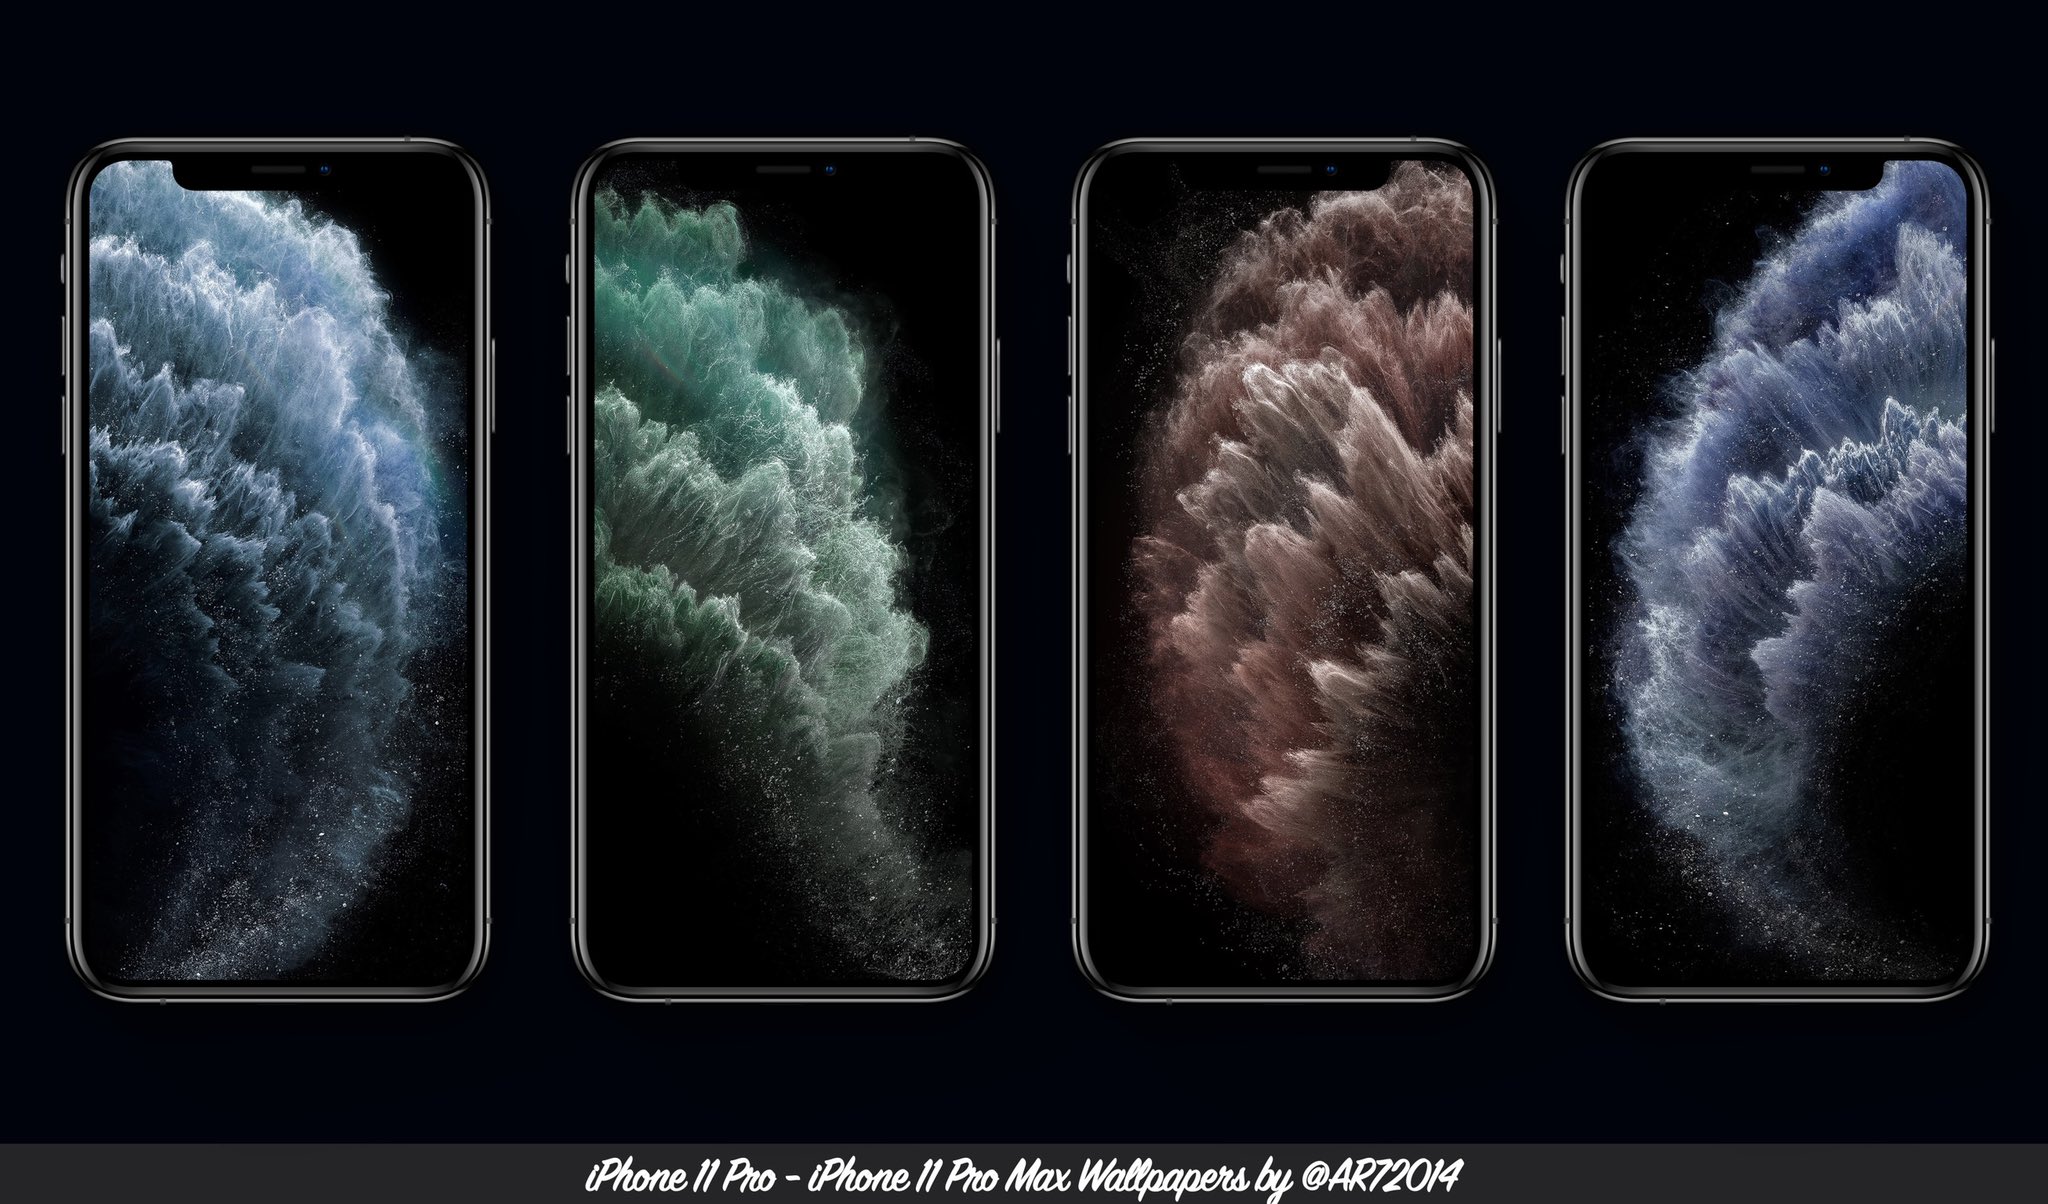 Bộ ảnh nền dark mode đẹp cho iPhone 11 và iOS 13